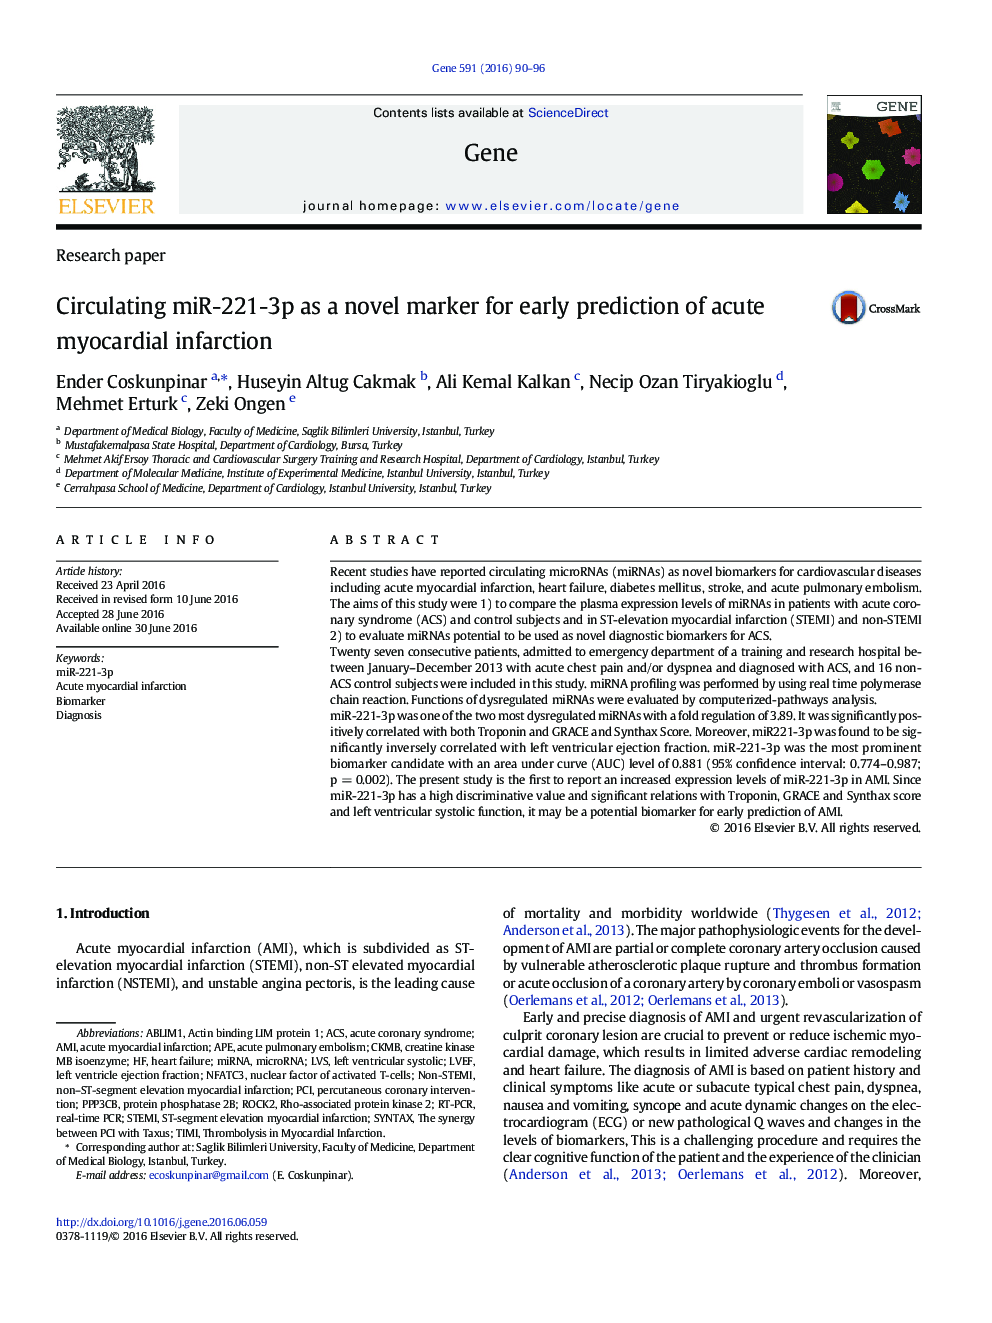 Circulating miR-221-3p as a novel marker for early prediction of acute myocardial infarction